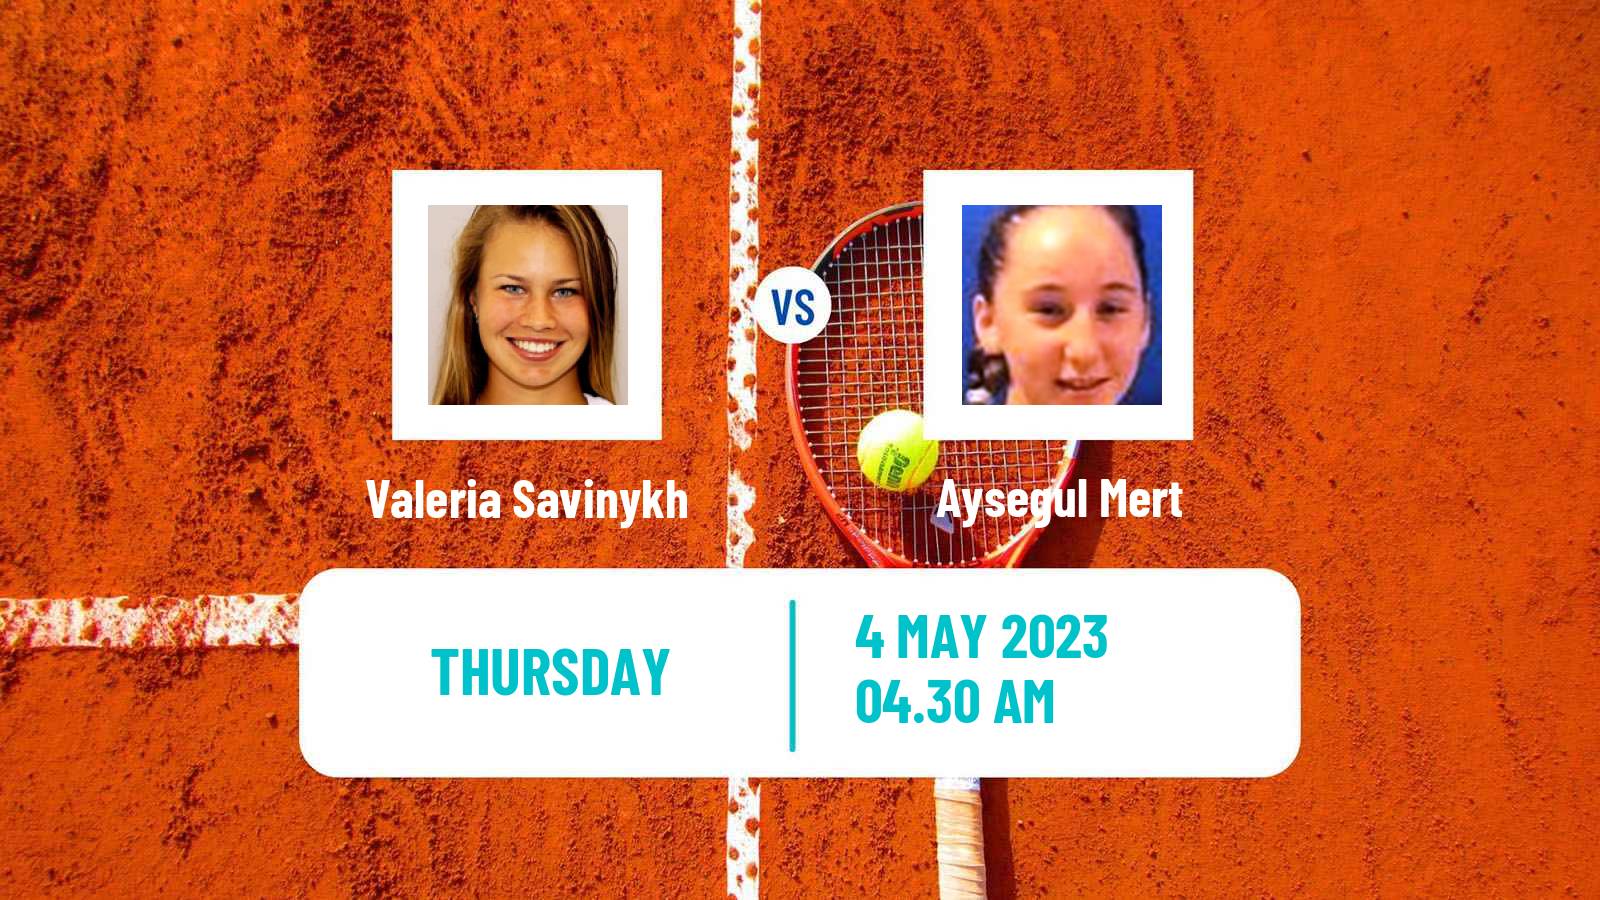 Tennis ITF Tournaments Valeria Savinykh - Aysegul Mert